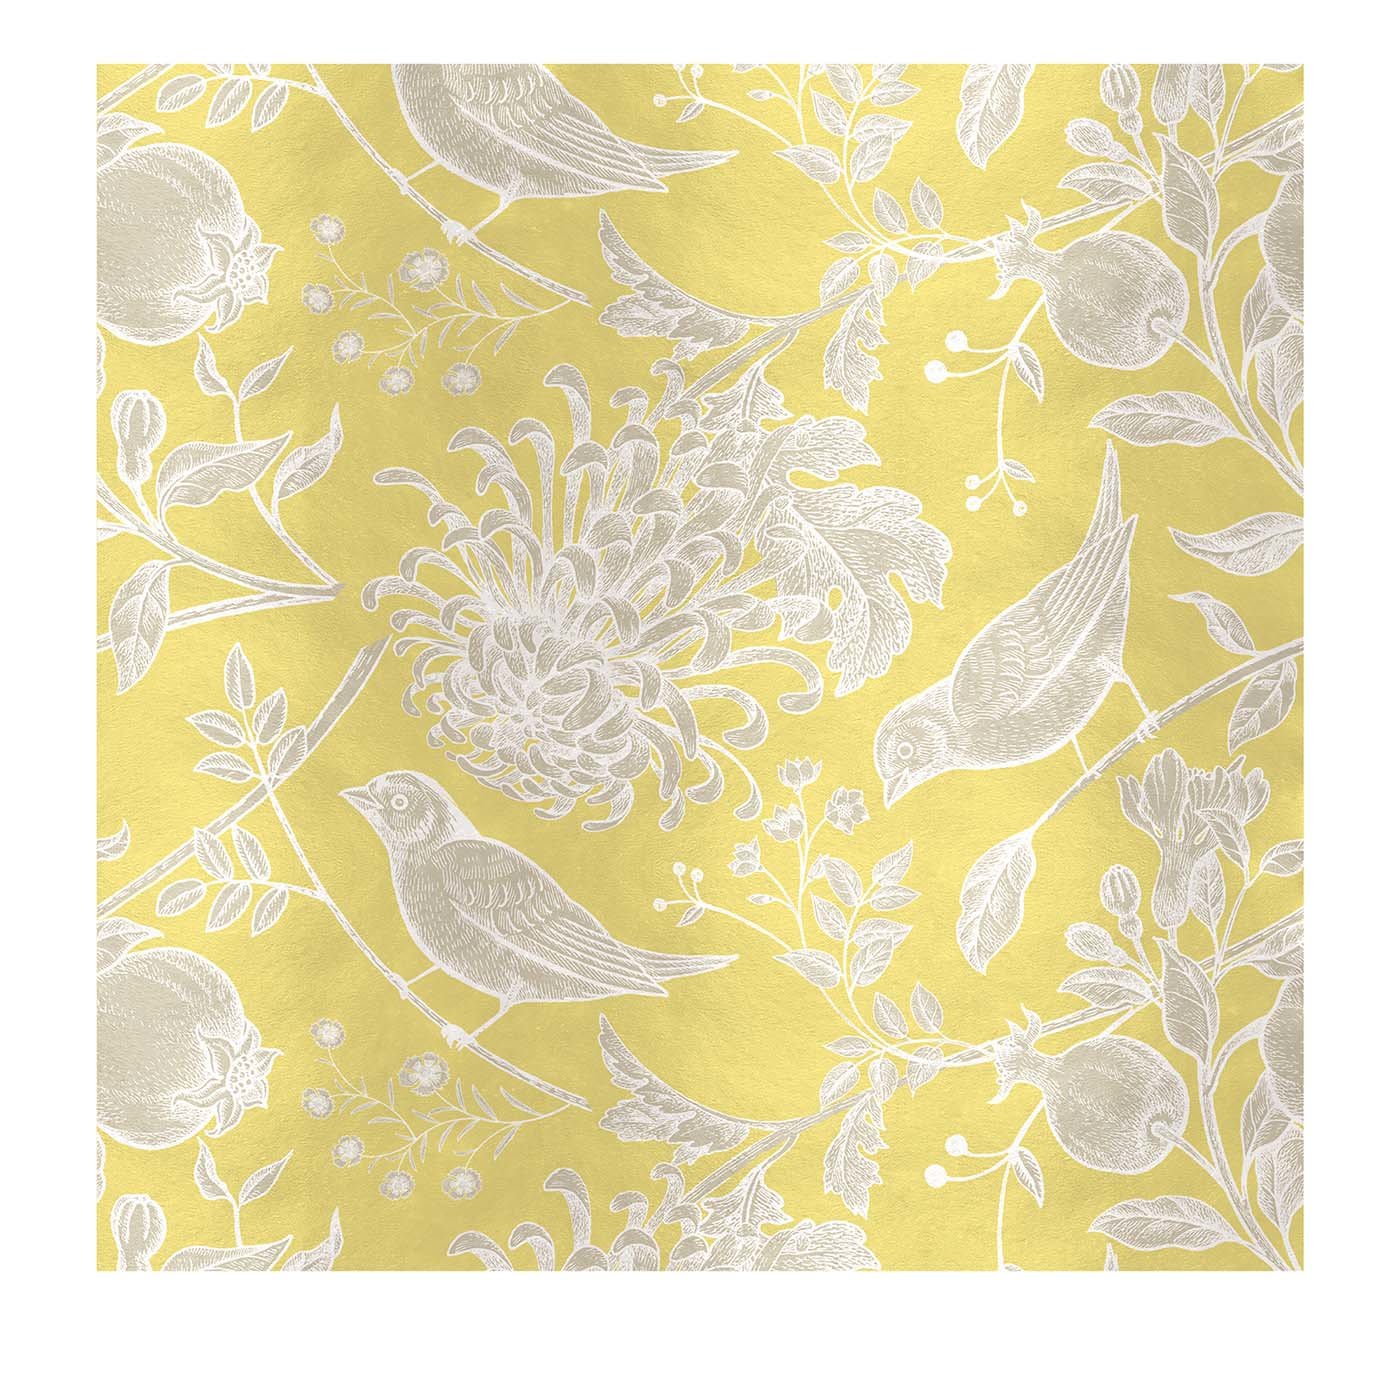 Flowers and Birds Yellow Panel - Midsummer Milano